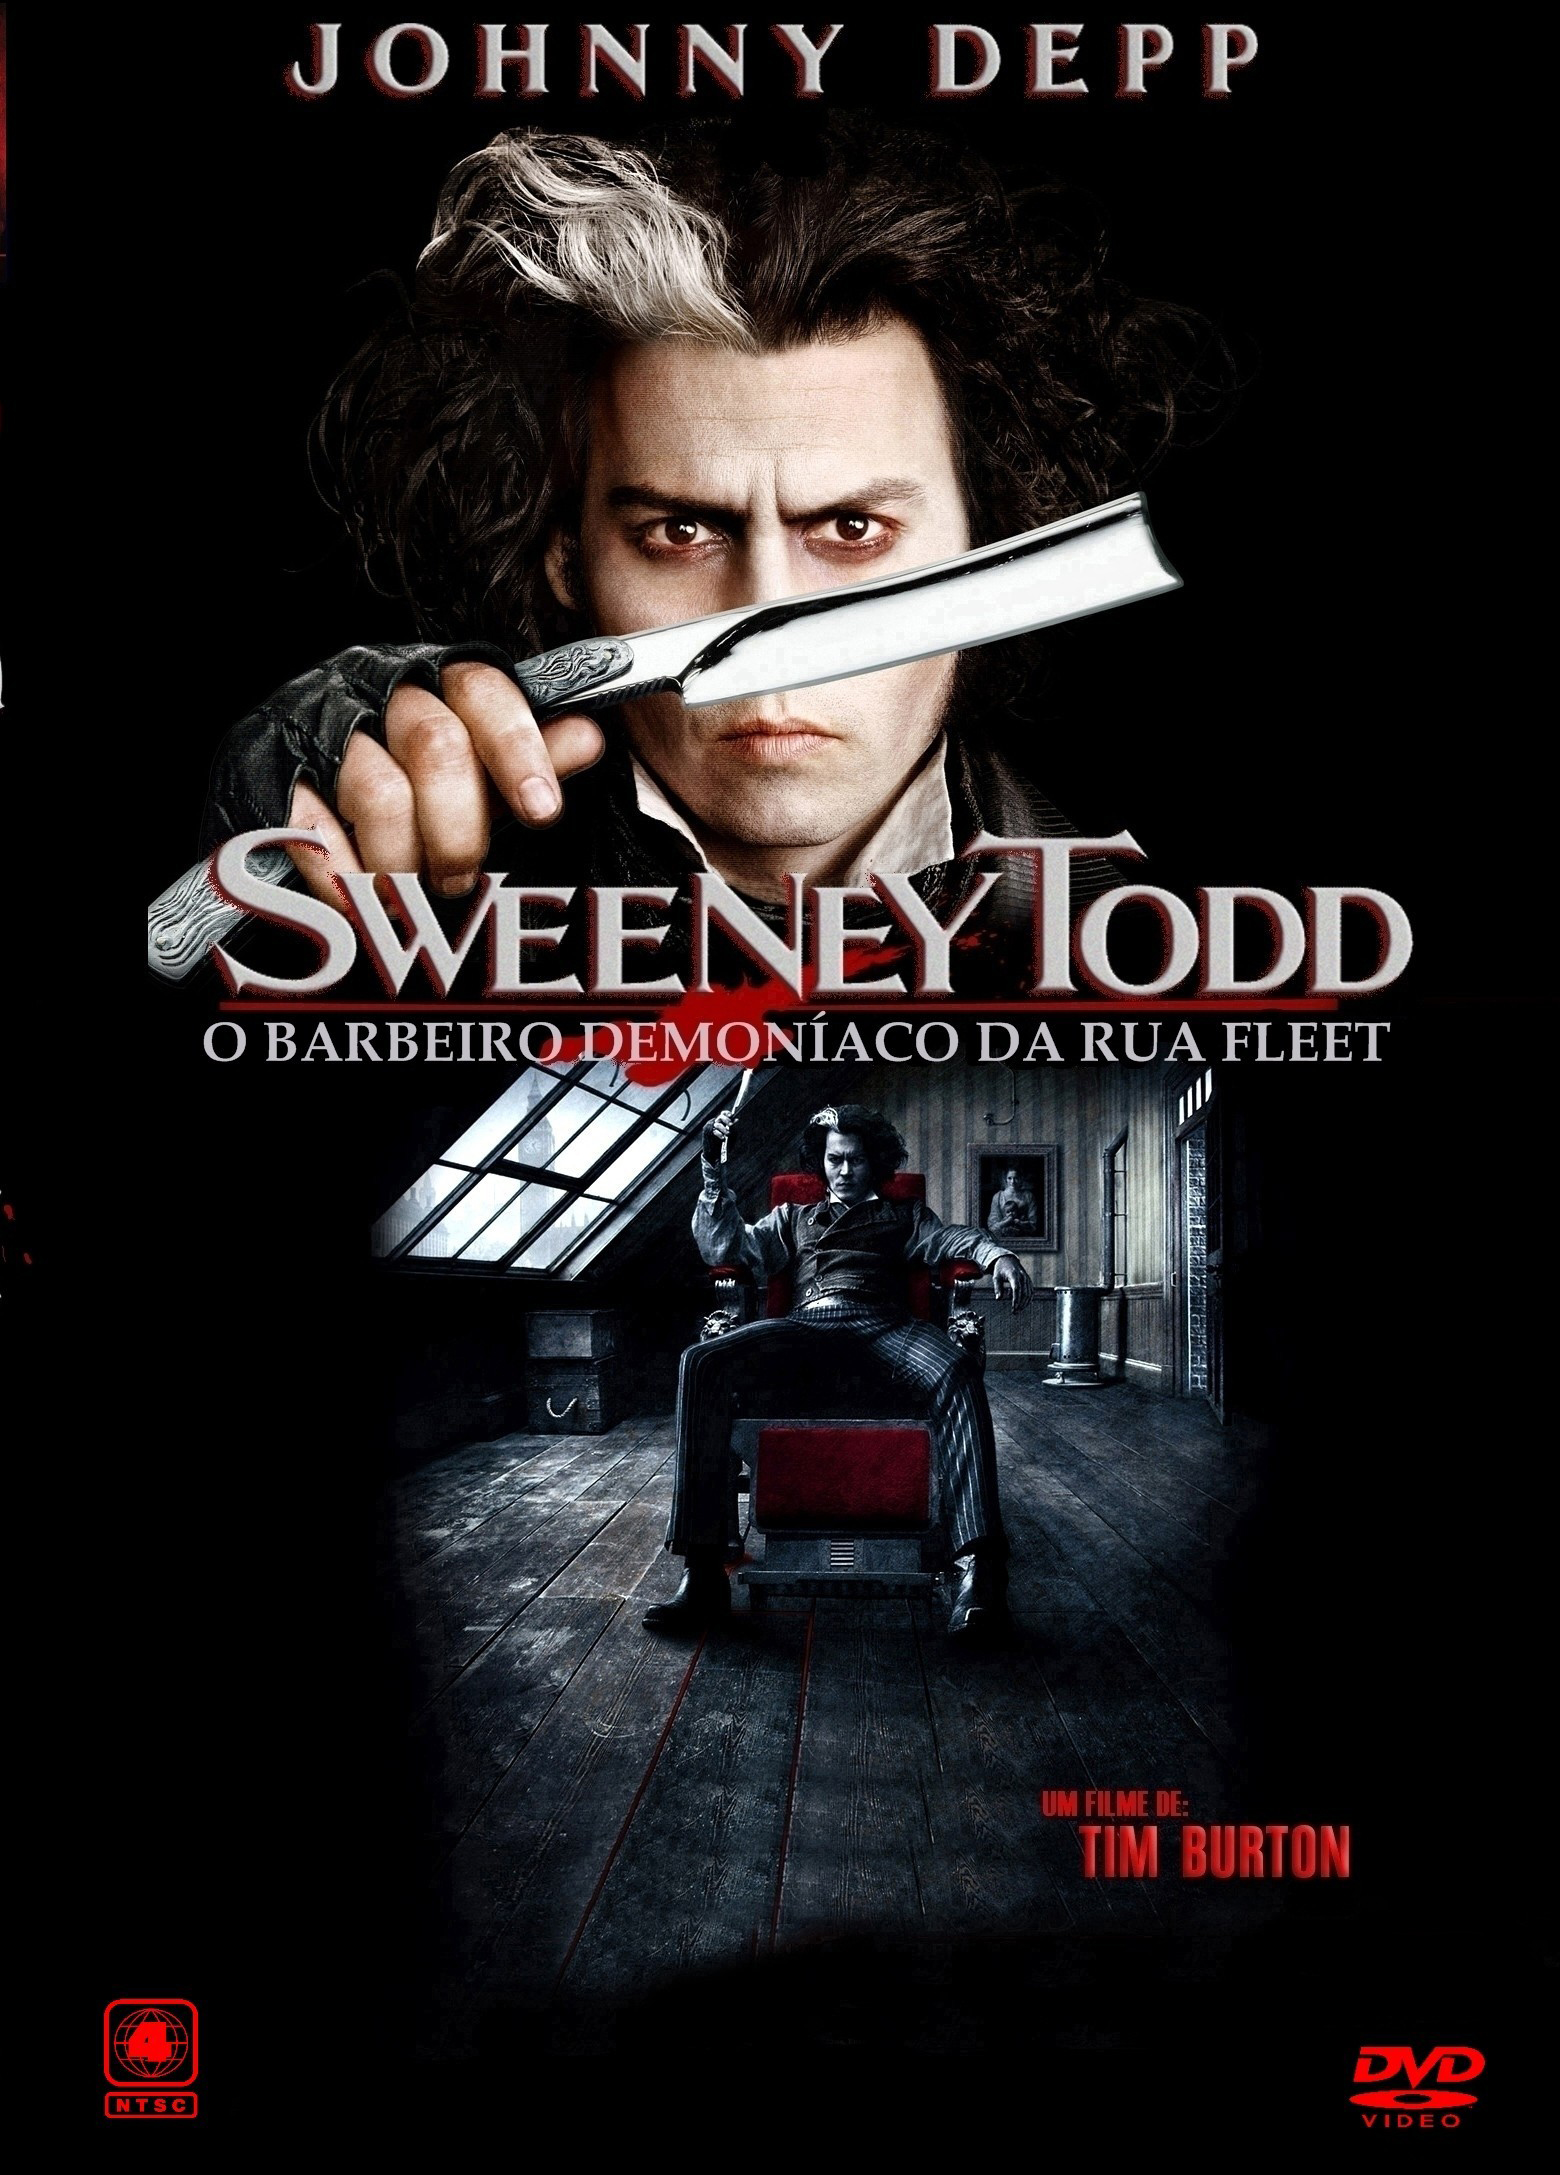 Crítica Sweeney Todd O Barbeiro Demoníaco da Rua Fleet Sweeney Todd The Demon Barber of